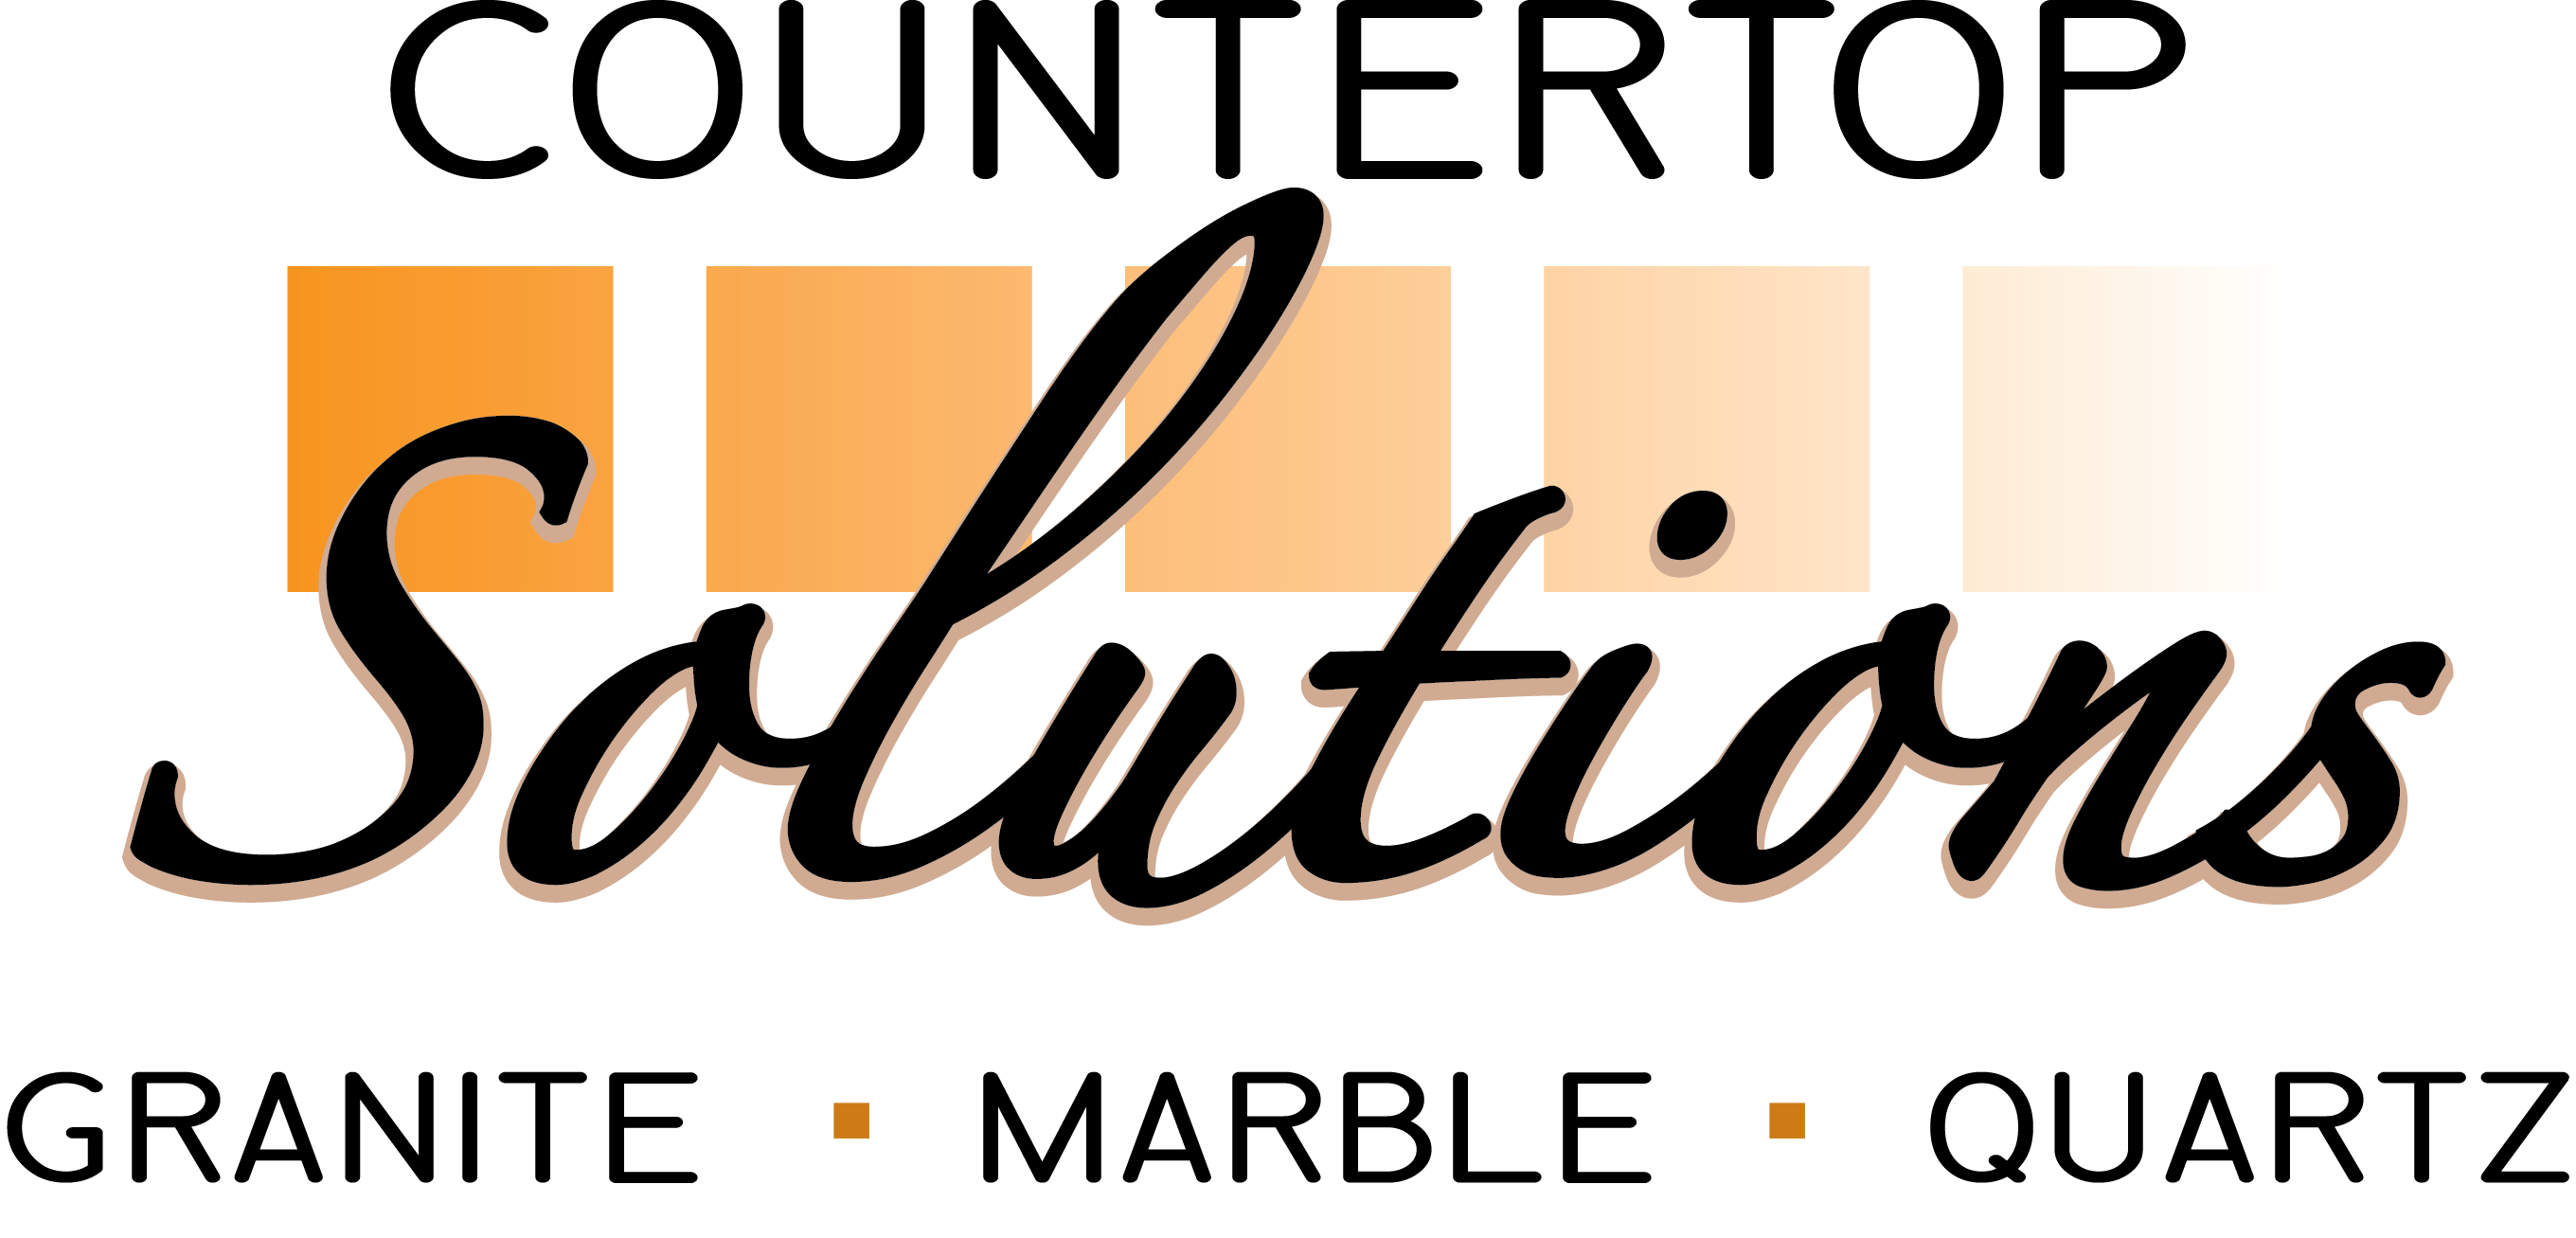 countertop solutions logo v2